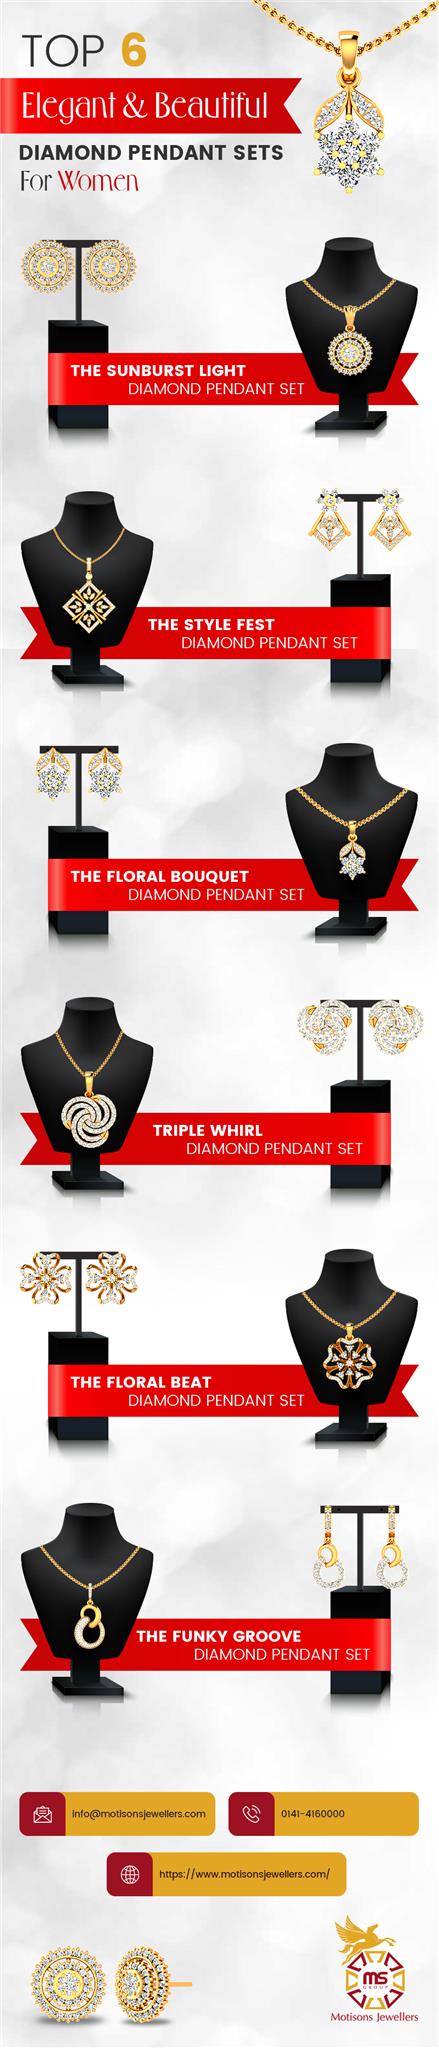 Top-6-Elegant-and-Beautiful-Diamond-Pendant-Set.jpg